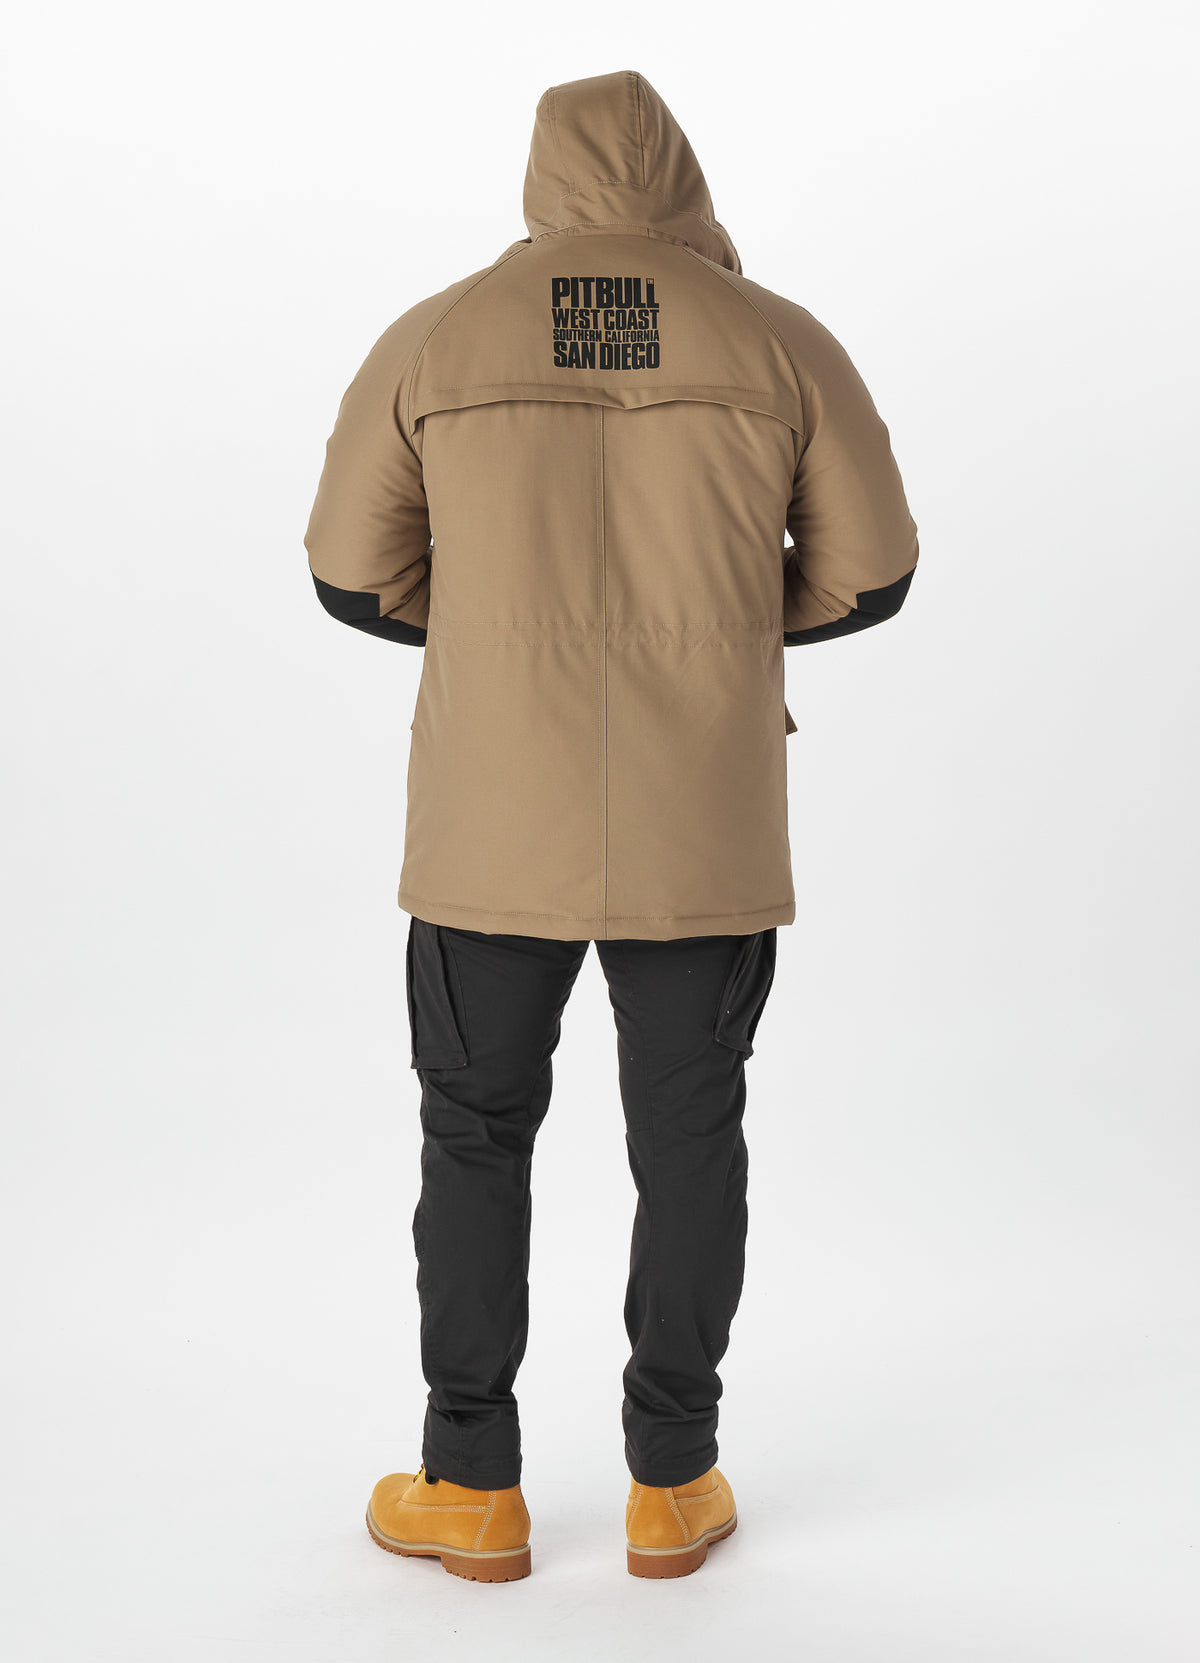 GUNNER Winter Sand Jacket - Pitbull West Coast International Store 